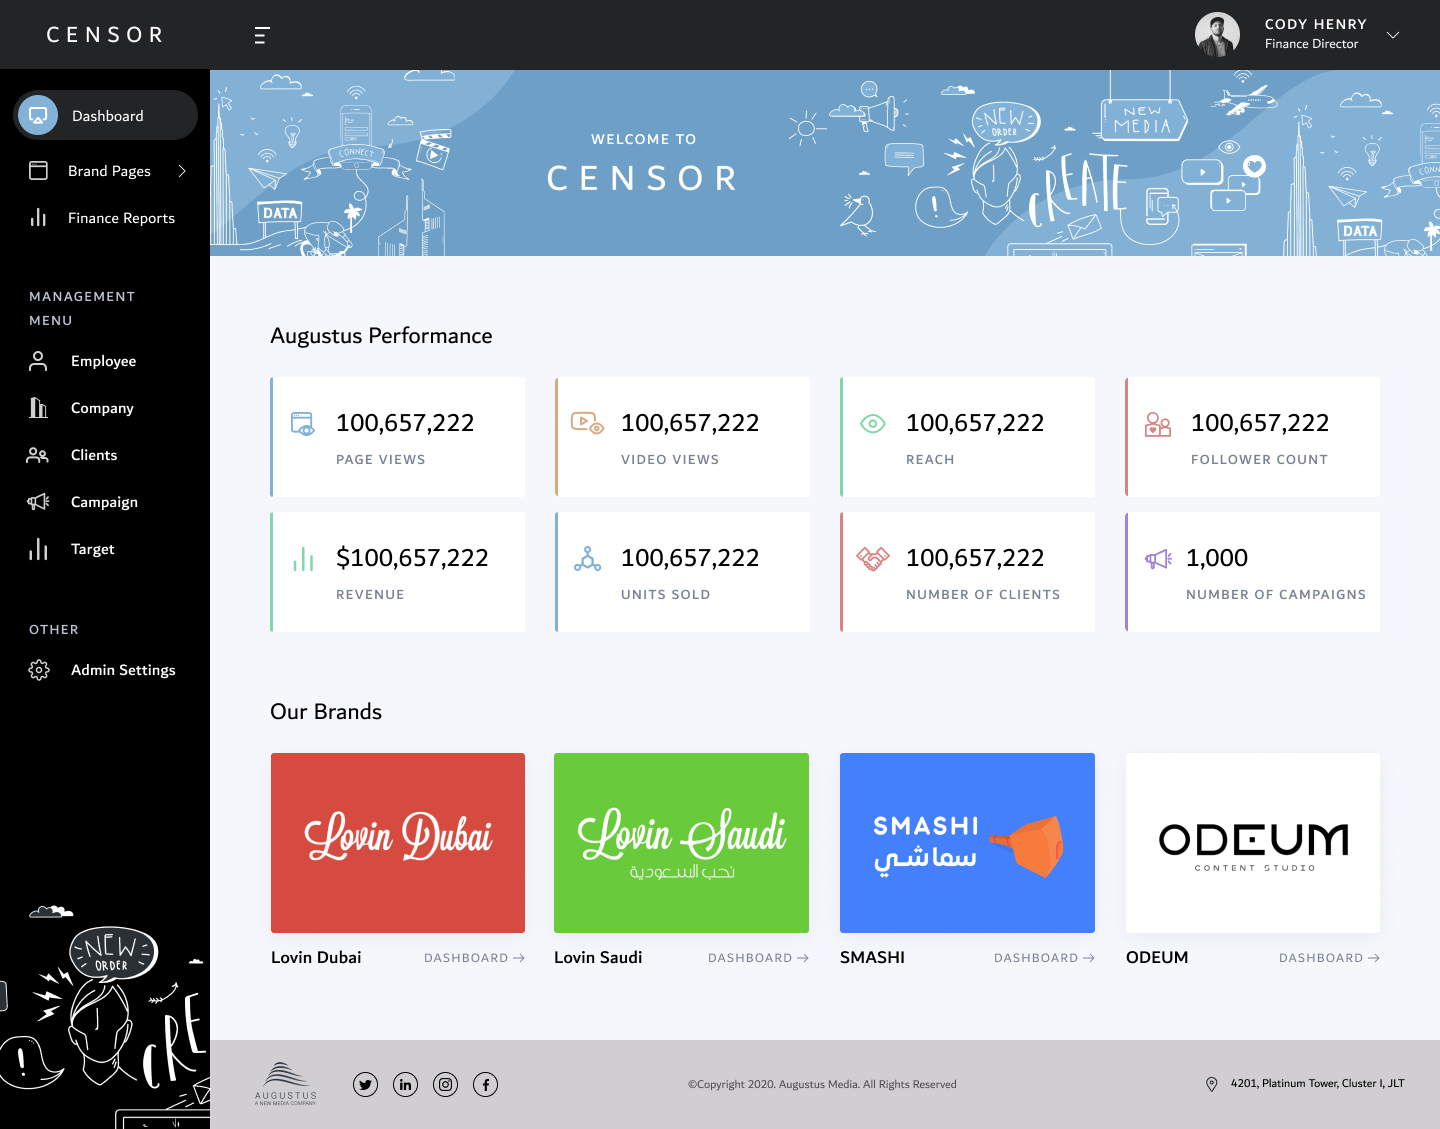 CENSOR Data Analytics Platform